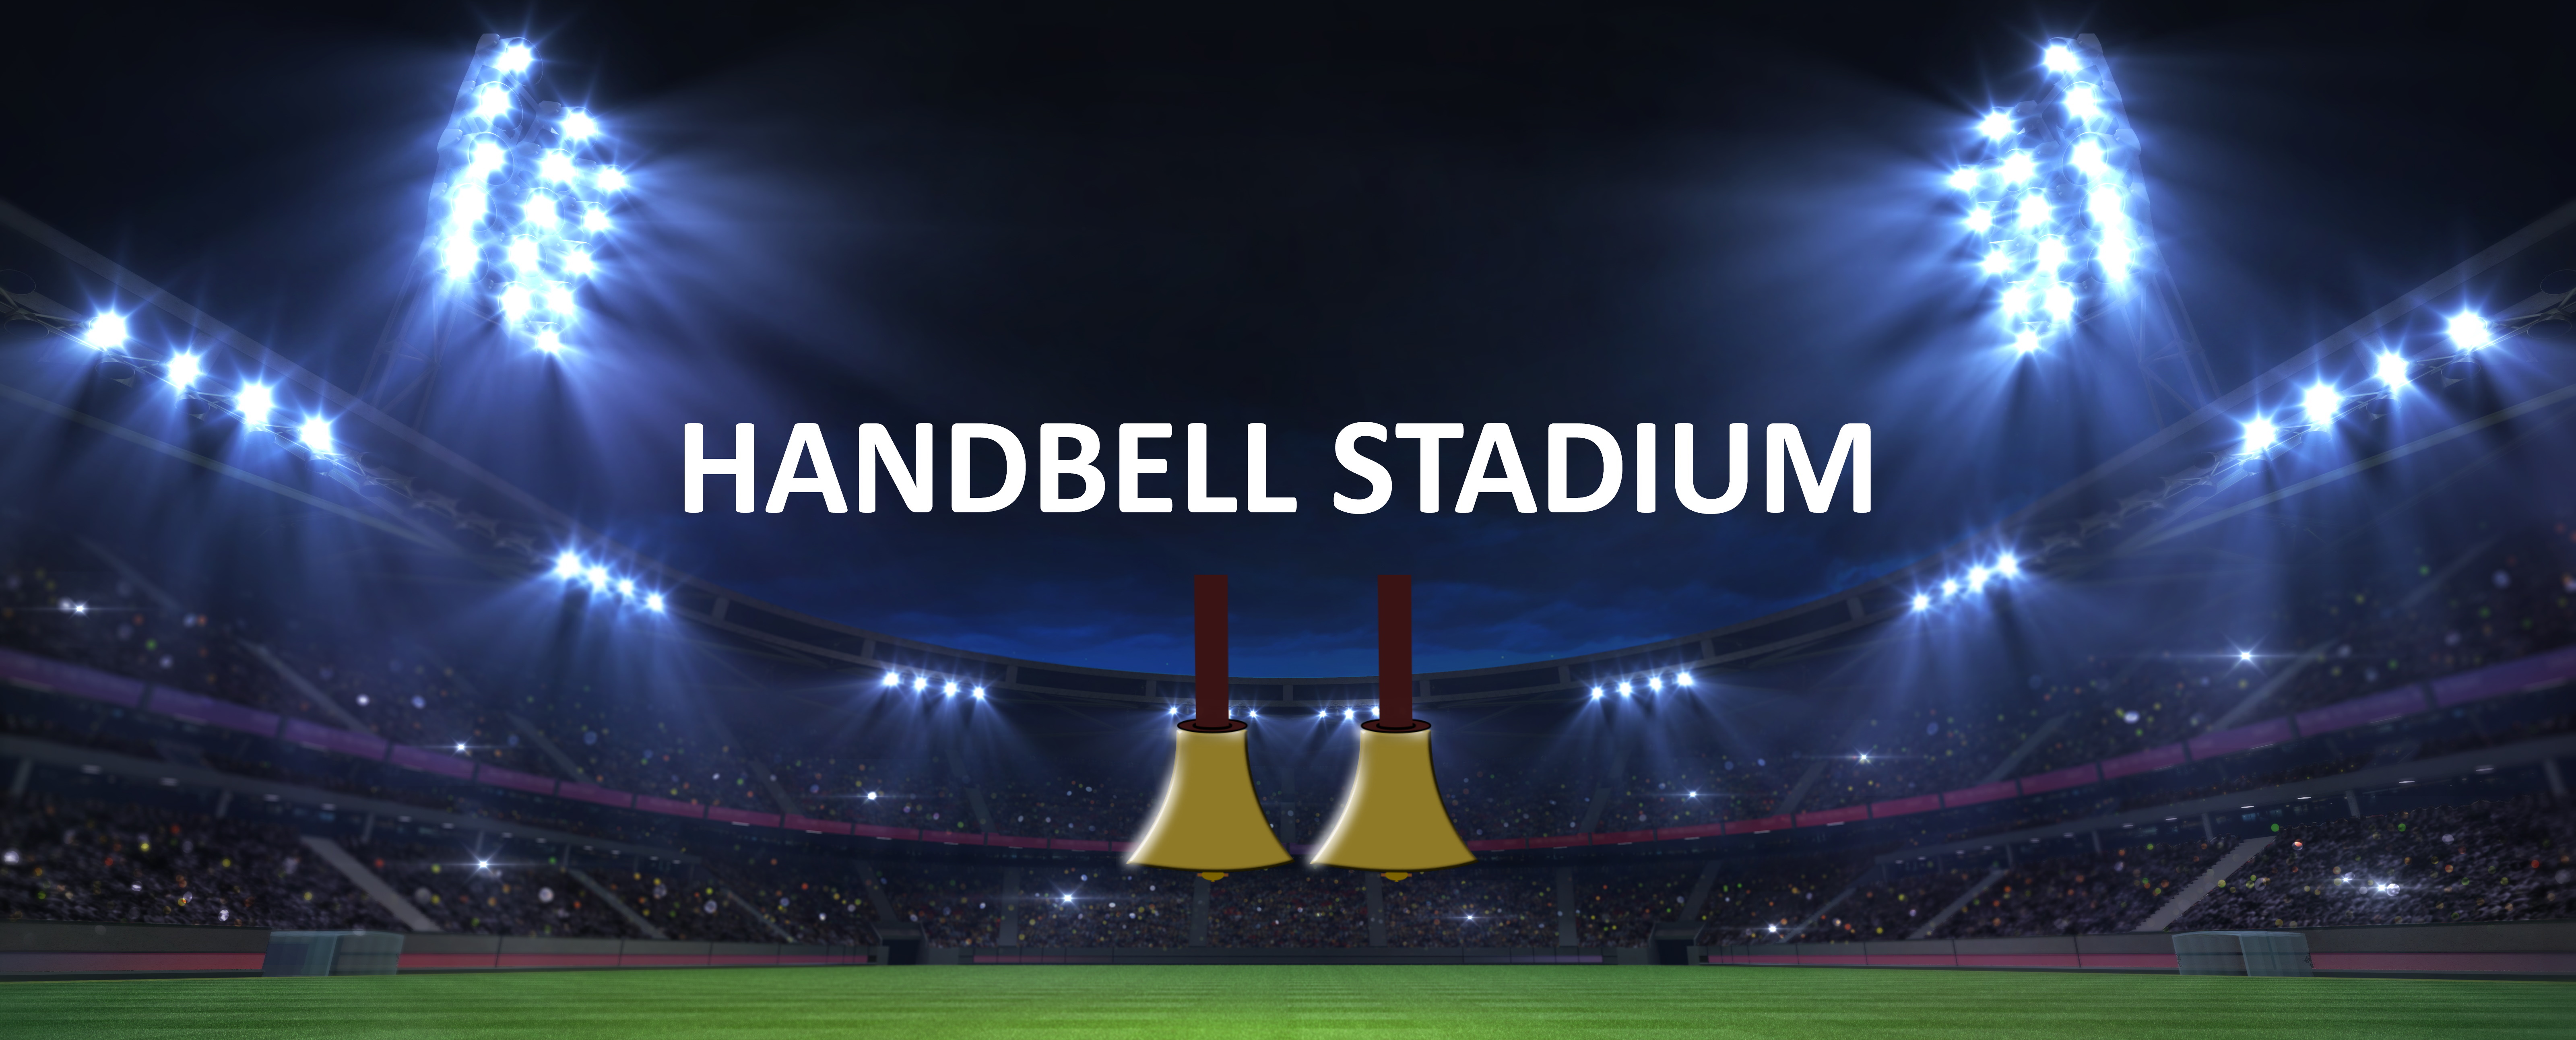 Handbell Stadium Title Screen